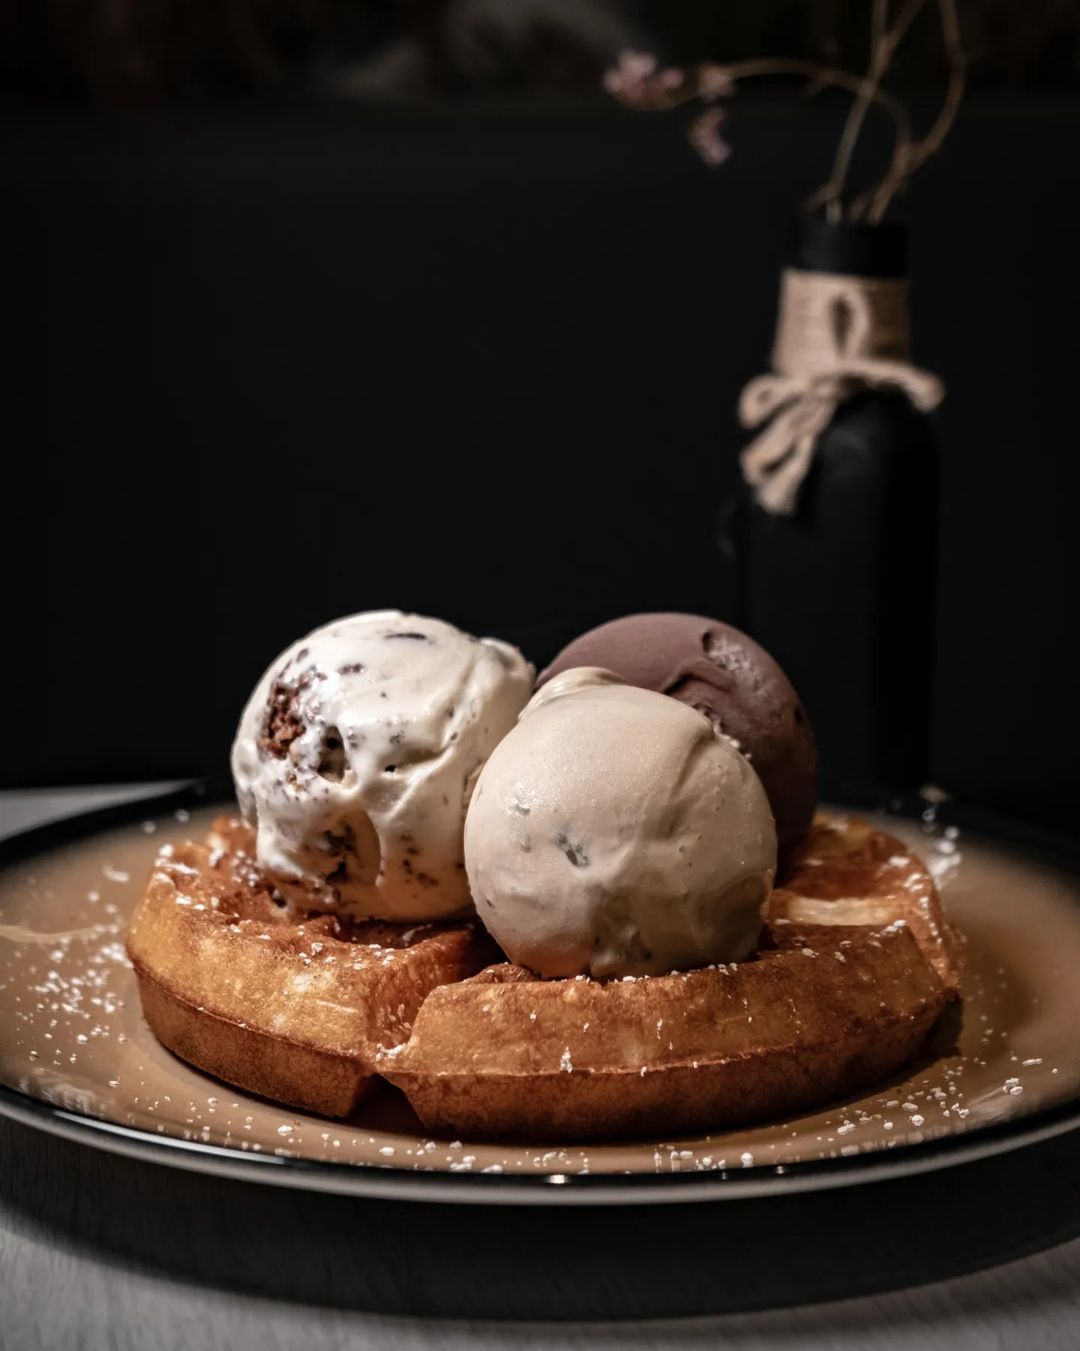 ice cream bar - ice cream and waffles